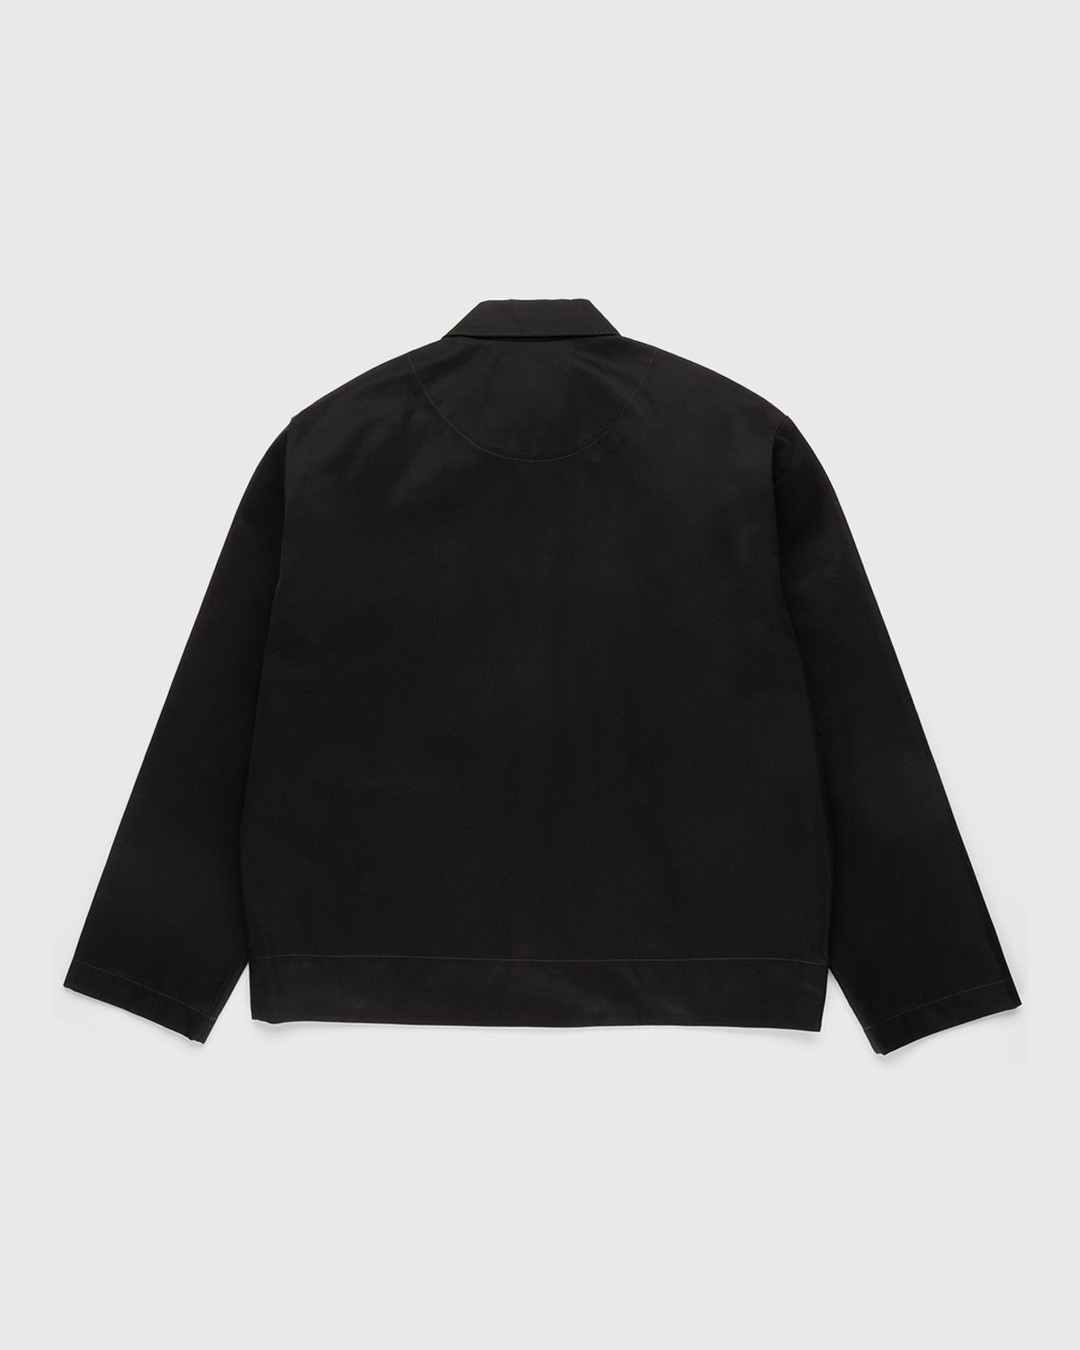 Acne Studios – Cotton Twill Jacket Black - Jackets - Black - Image 2